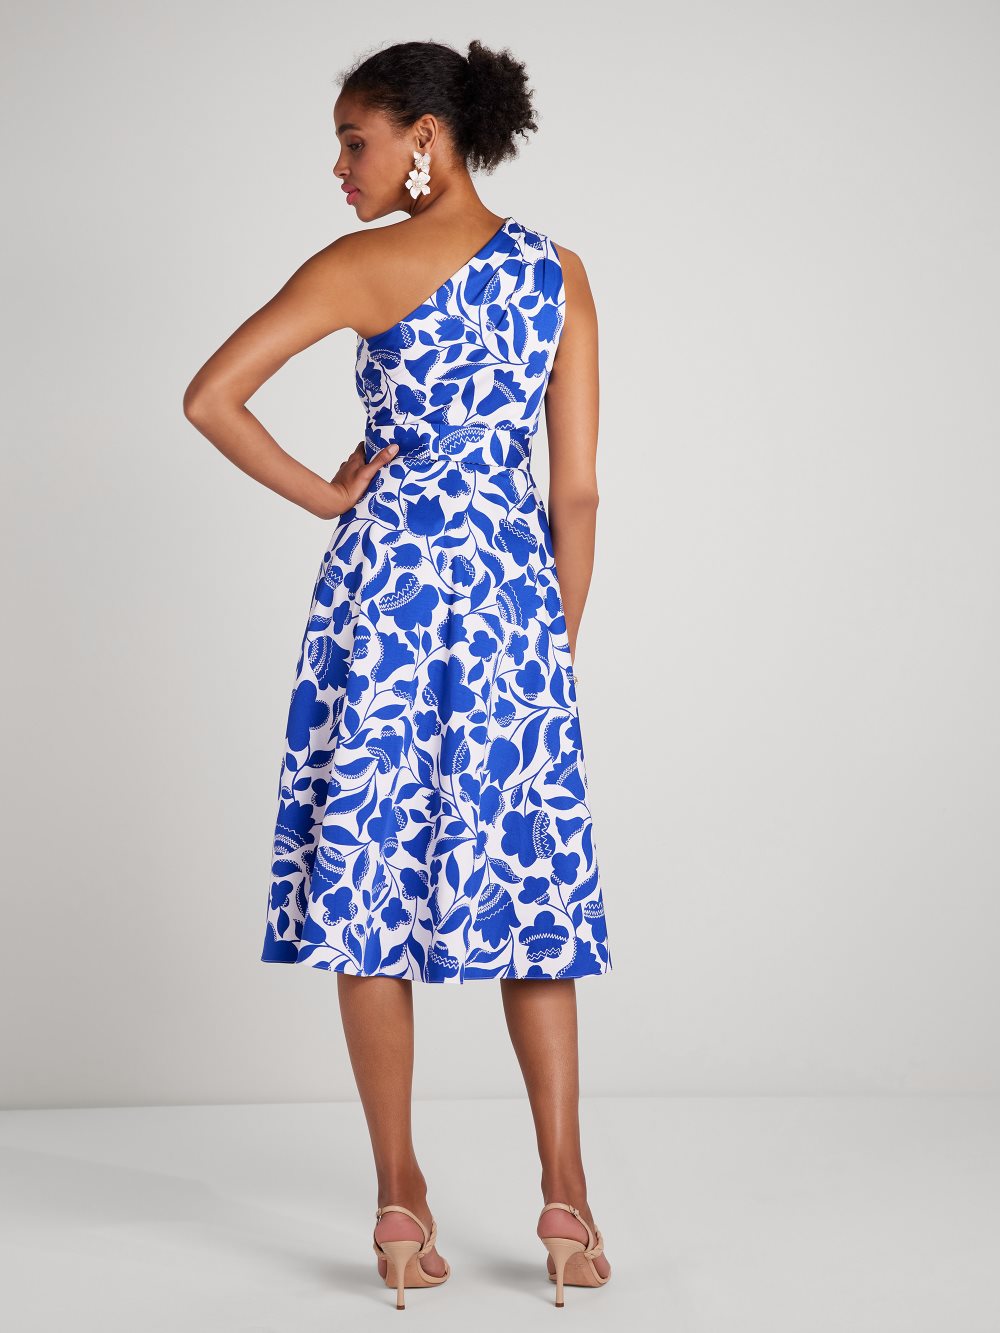 Women's blueberry zigzag floral belted sabrina dress | Kate Spade